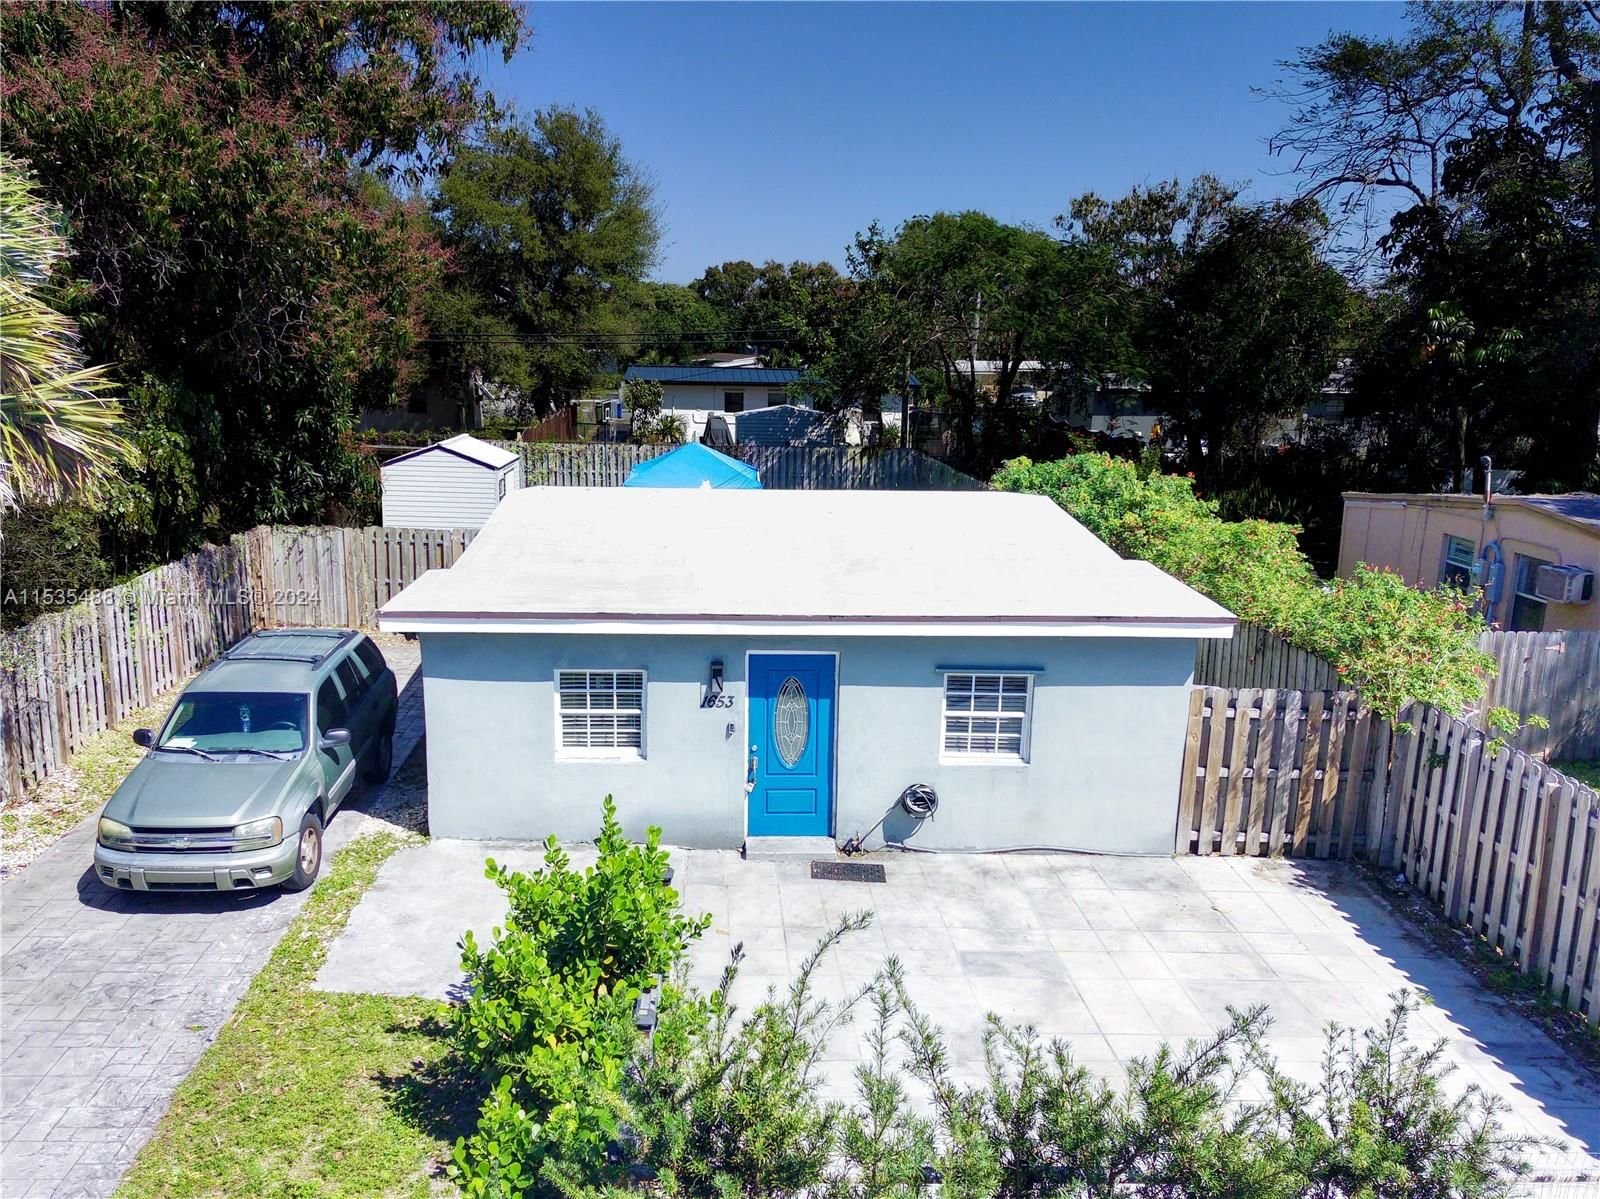 Real estate property located at 1653 Lauderdale Manor Drive, Broward County, Lauderdale Manor Rev, Fort Lauderdale, FL